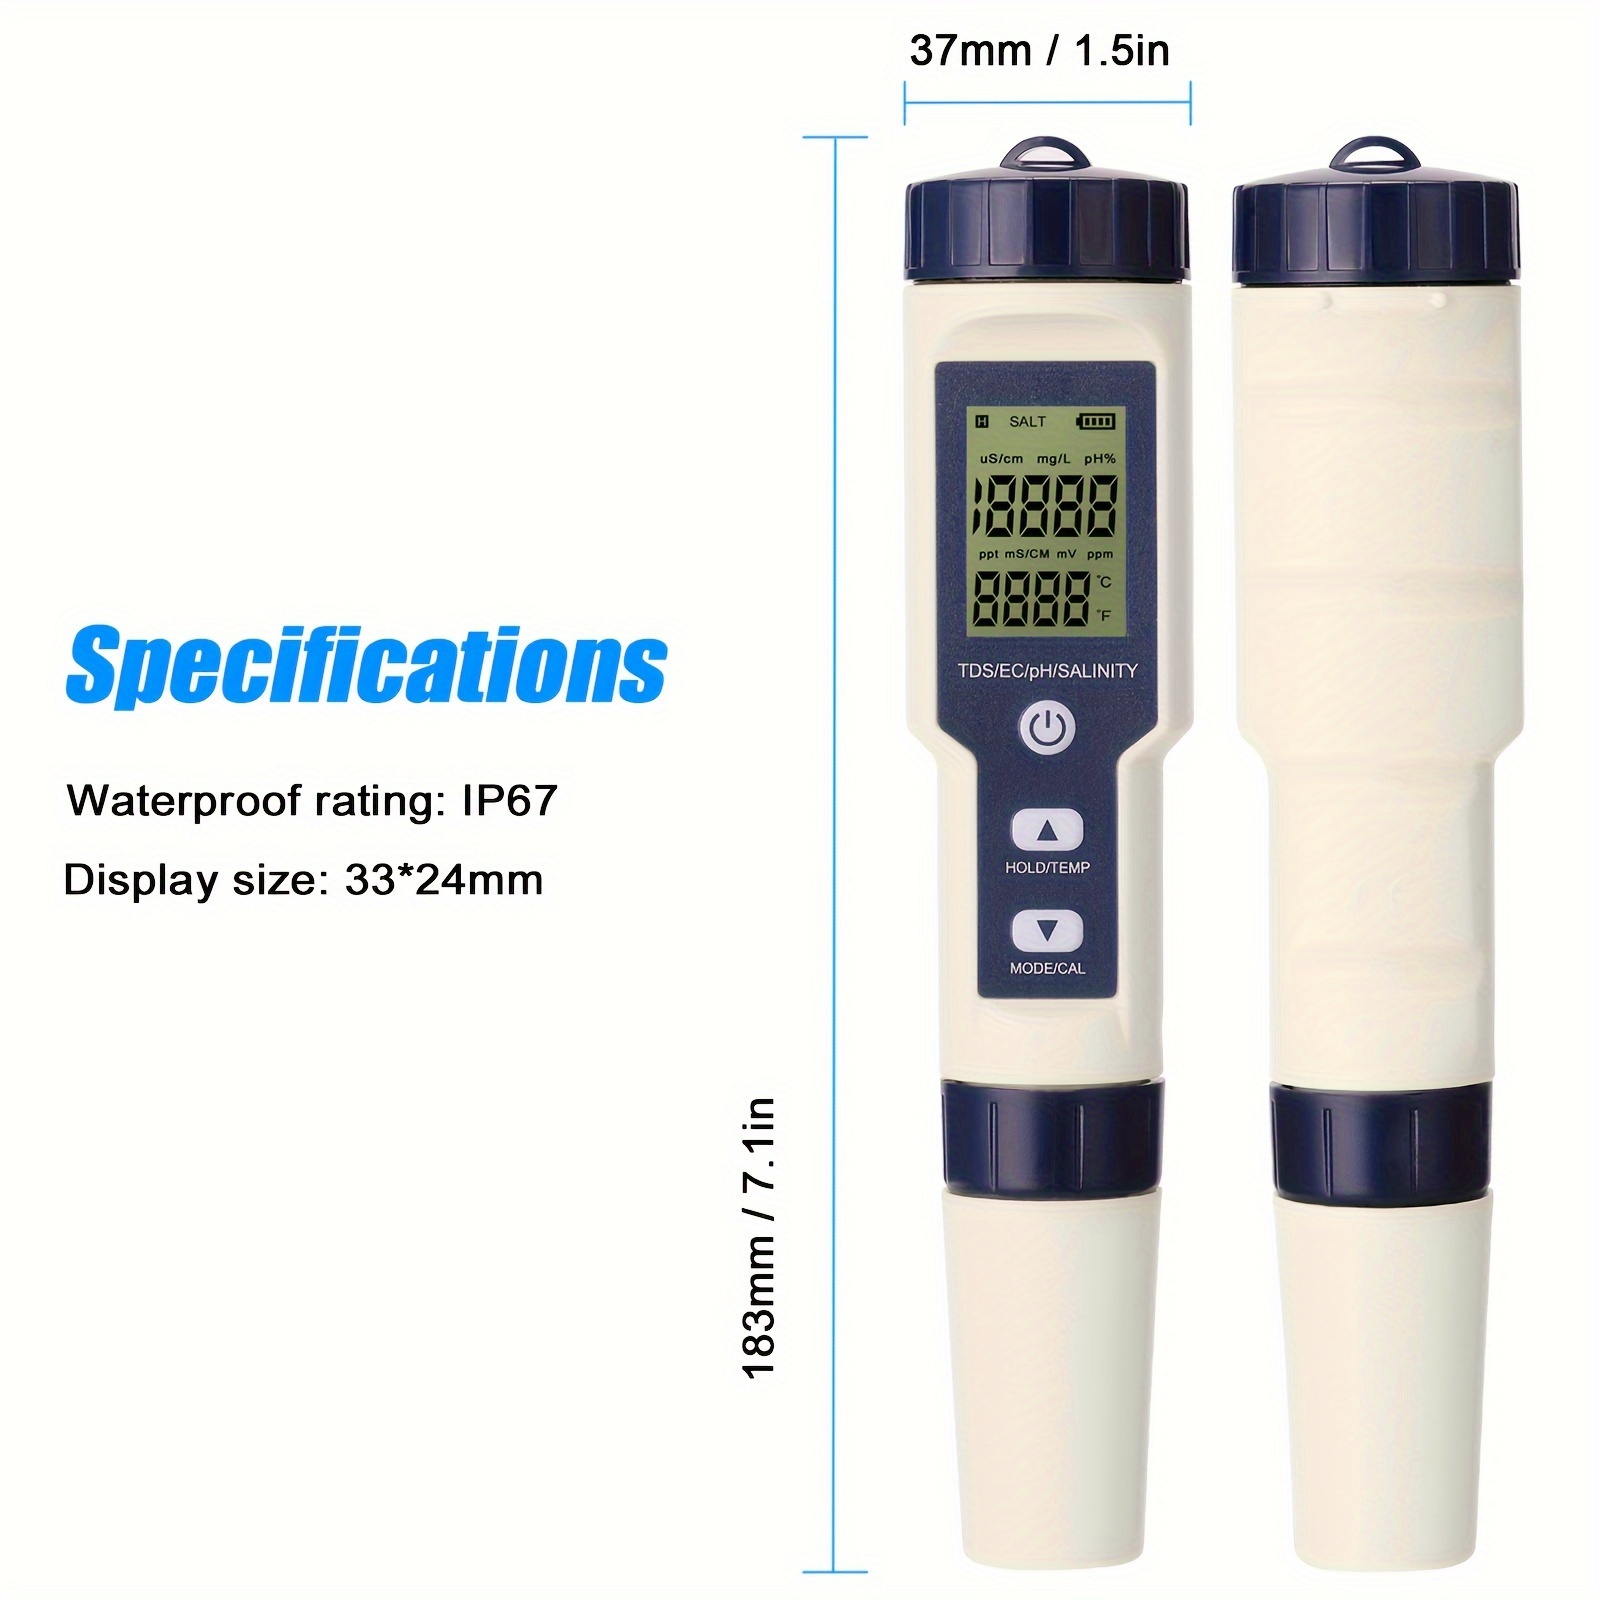 Digital Water Quality Tester WiFi PH EC TDS SALT SG Temp Meter